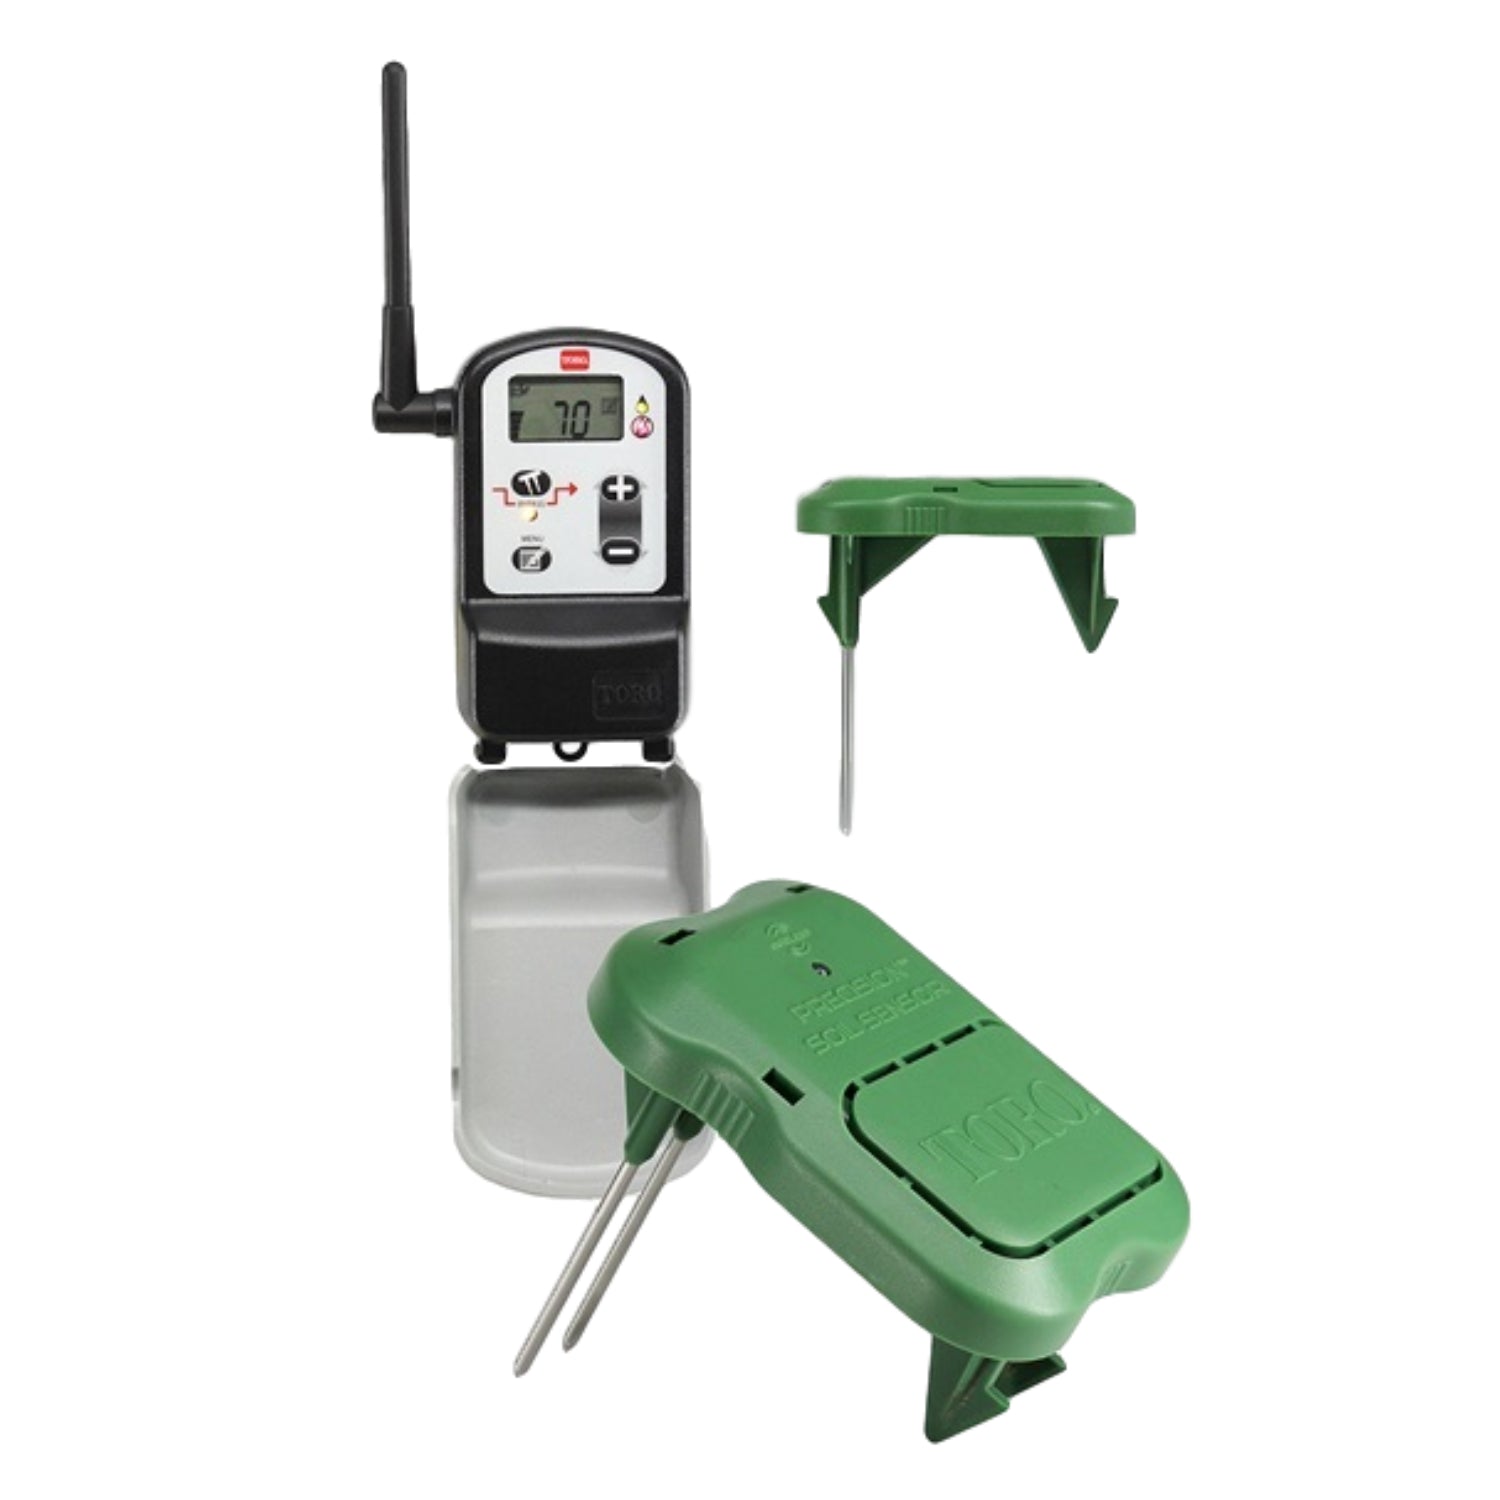 Toro - PSS-KIT- Precision Soil Moisture Sensor, Probe and Receiver